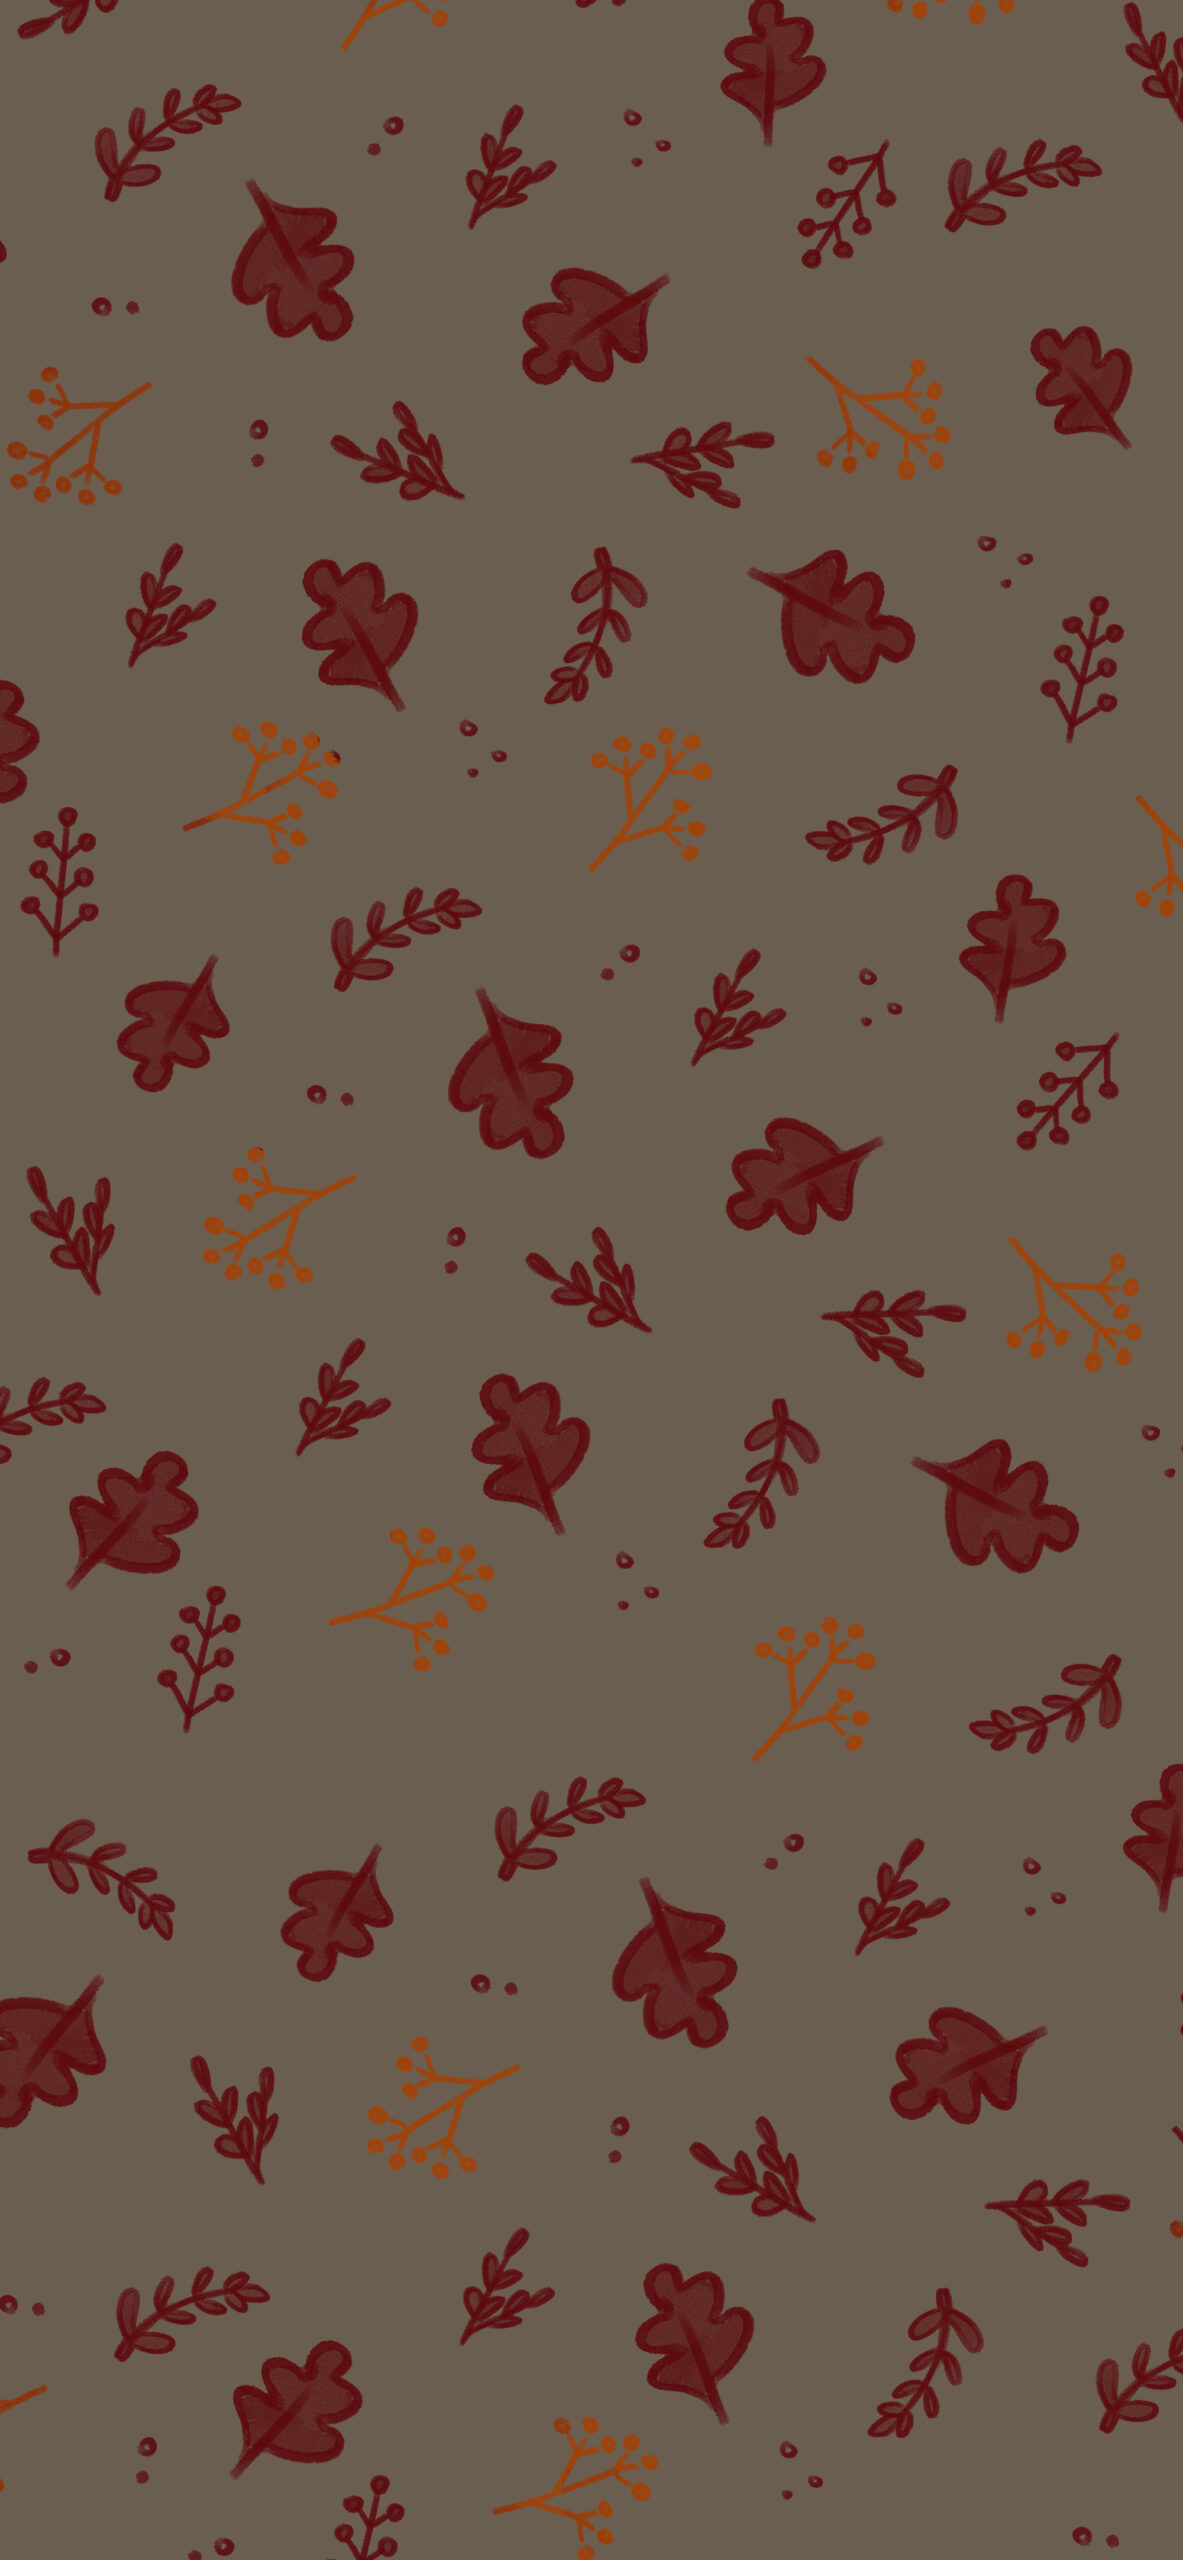 1183x2560 Oak Leaves Brown Wallpapers Aesthetic Fall Wallpaper for Phone